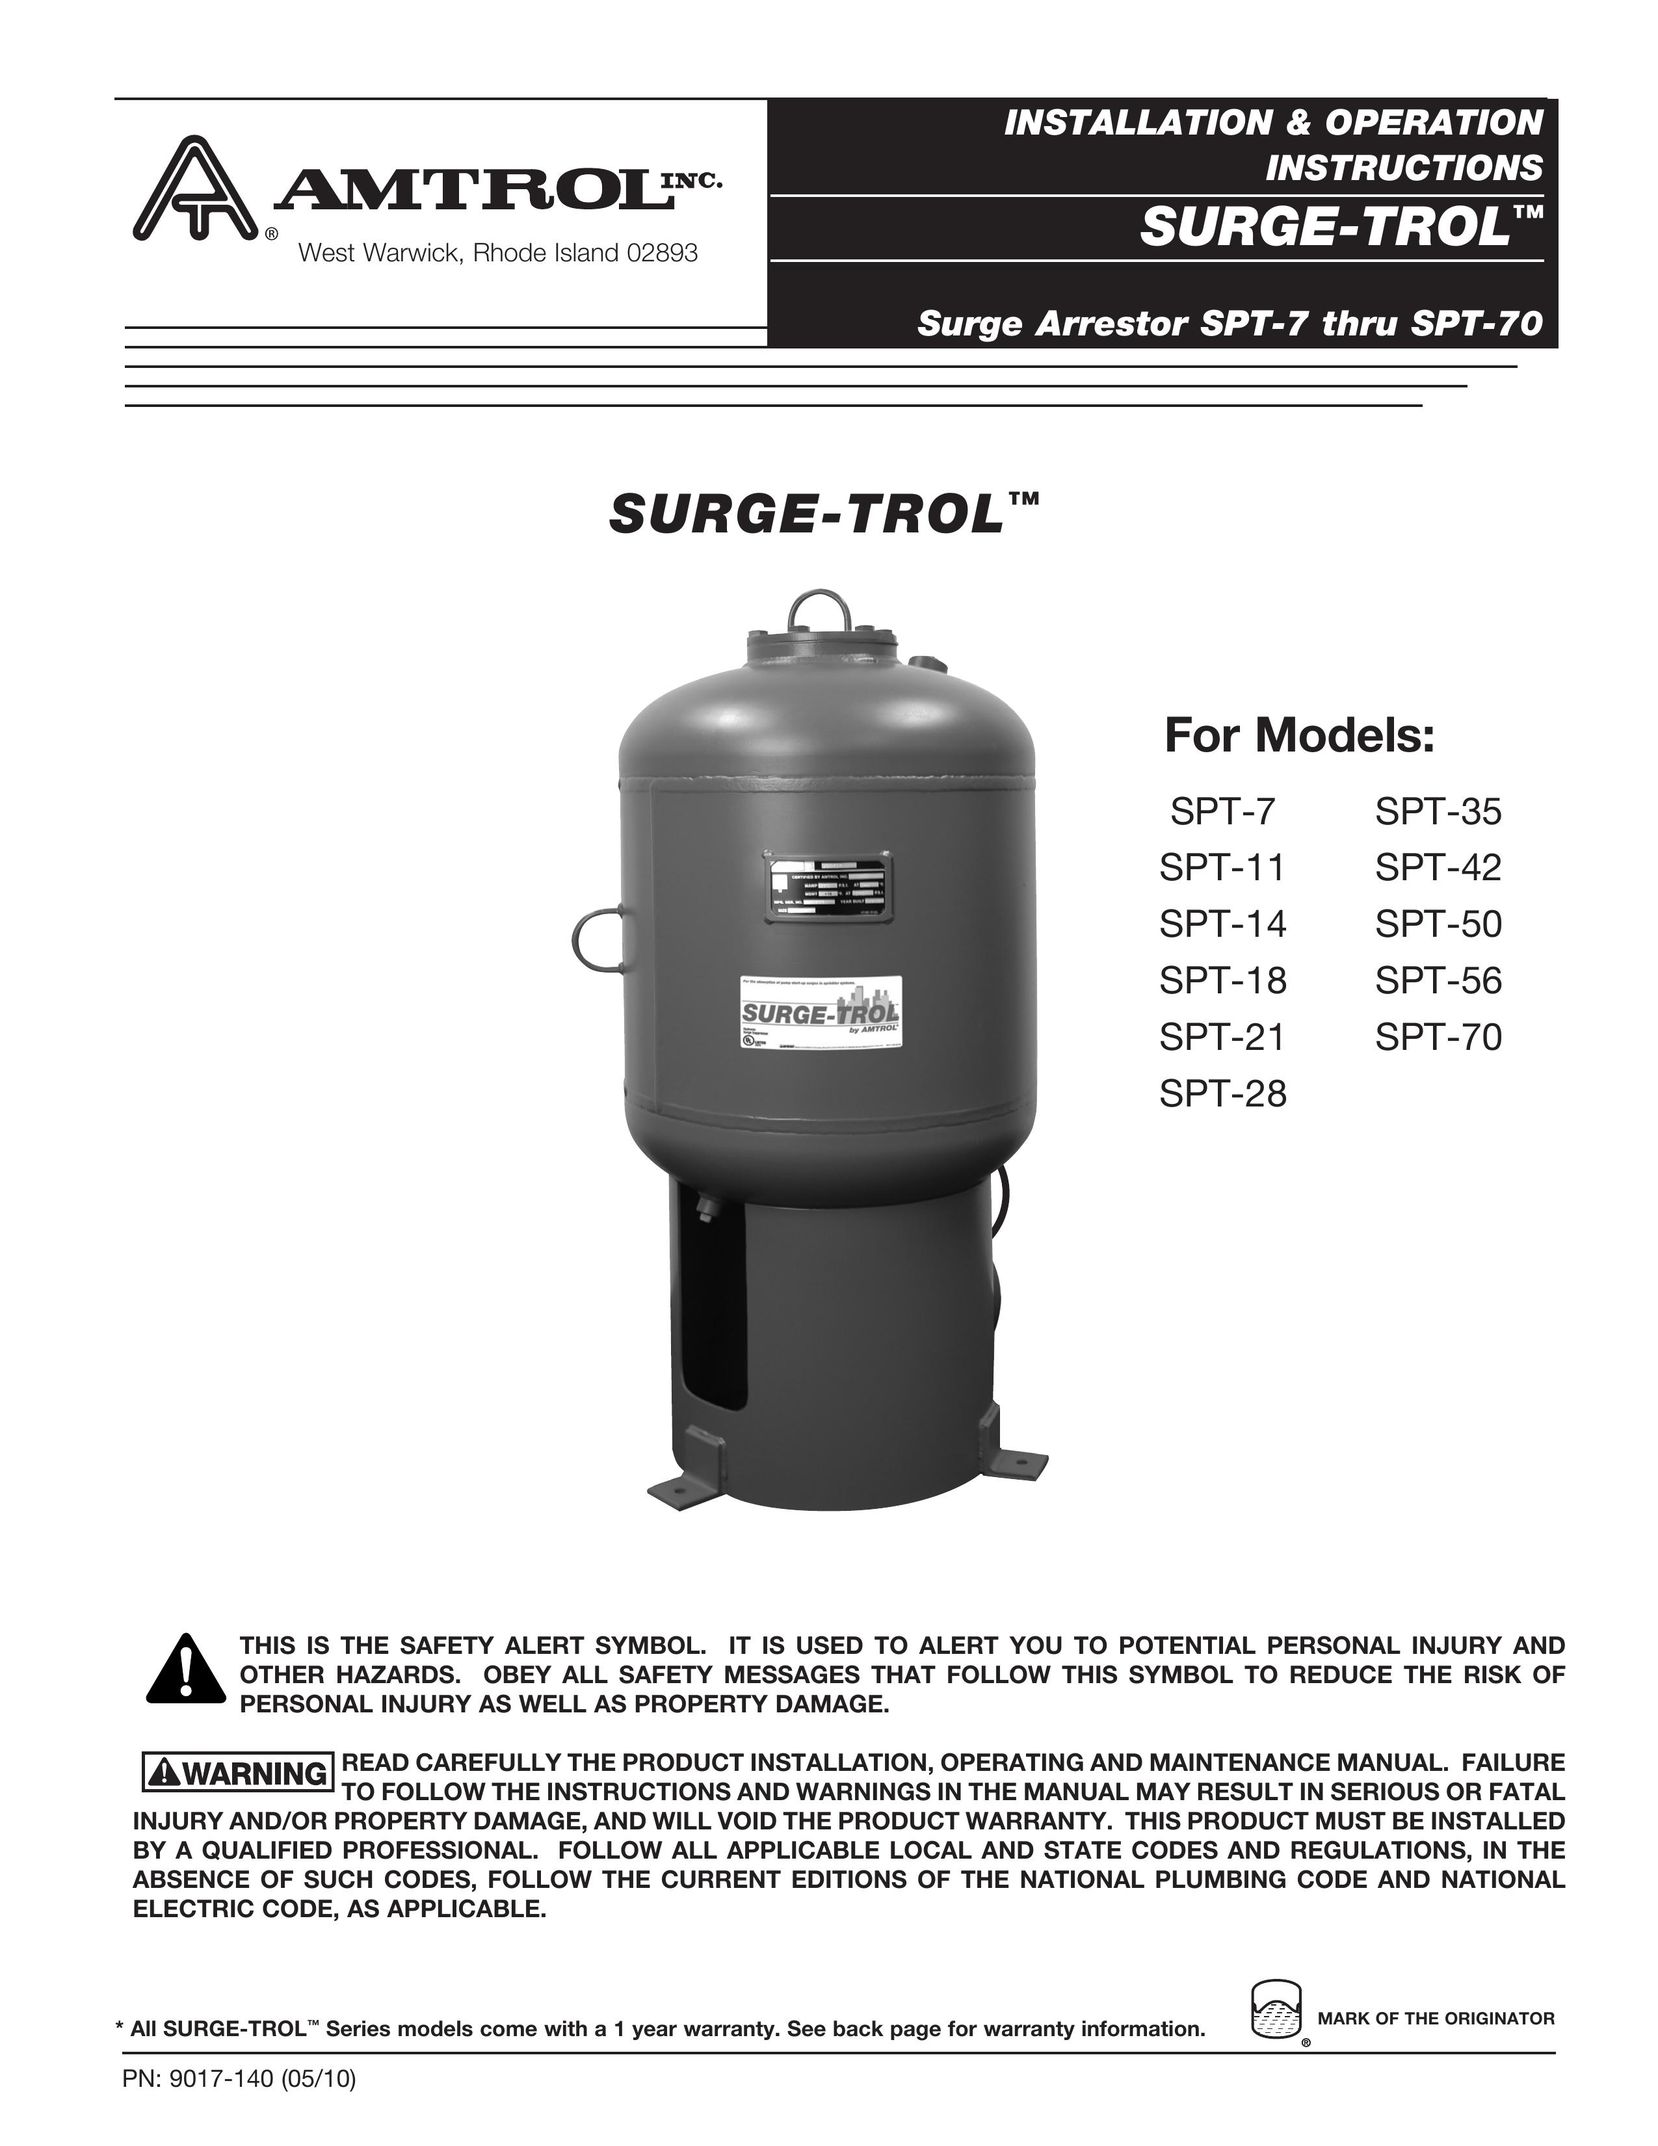 Amtrol SPT-42 Surge Protector User Manual